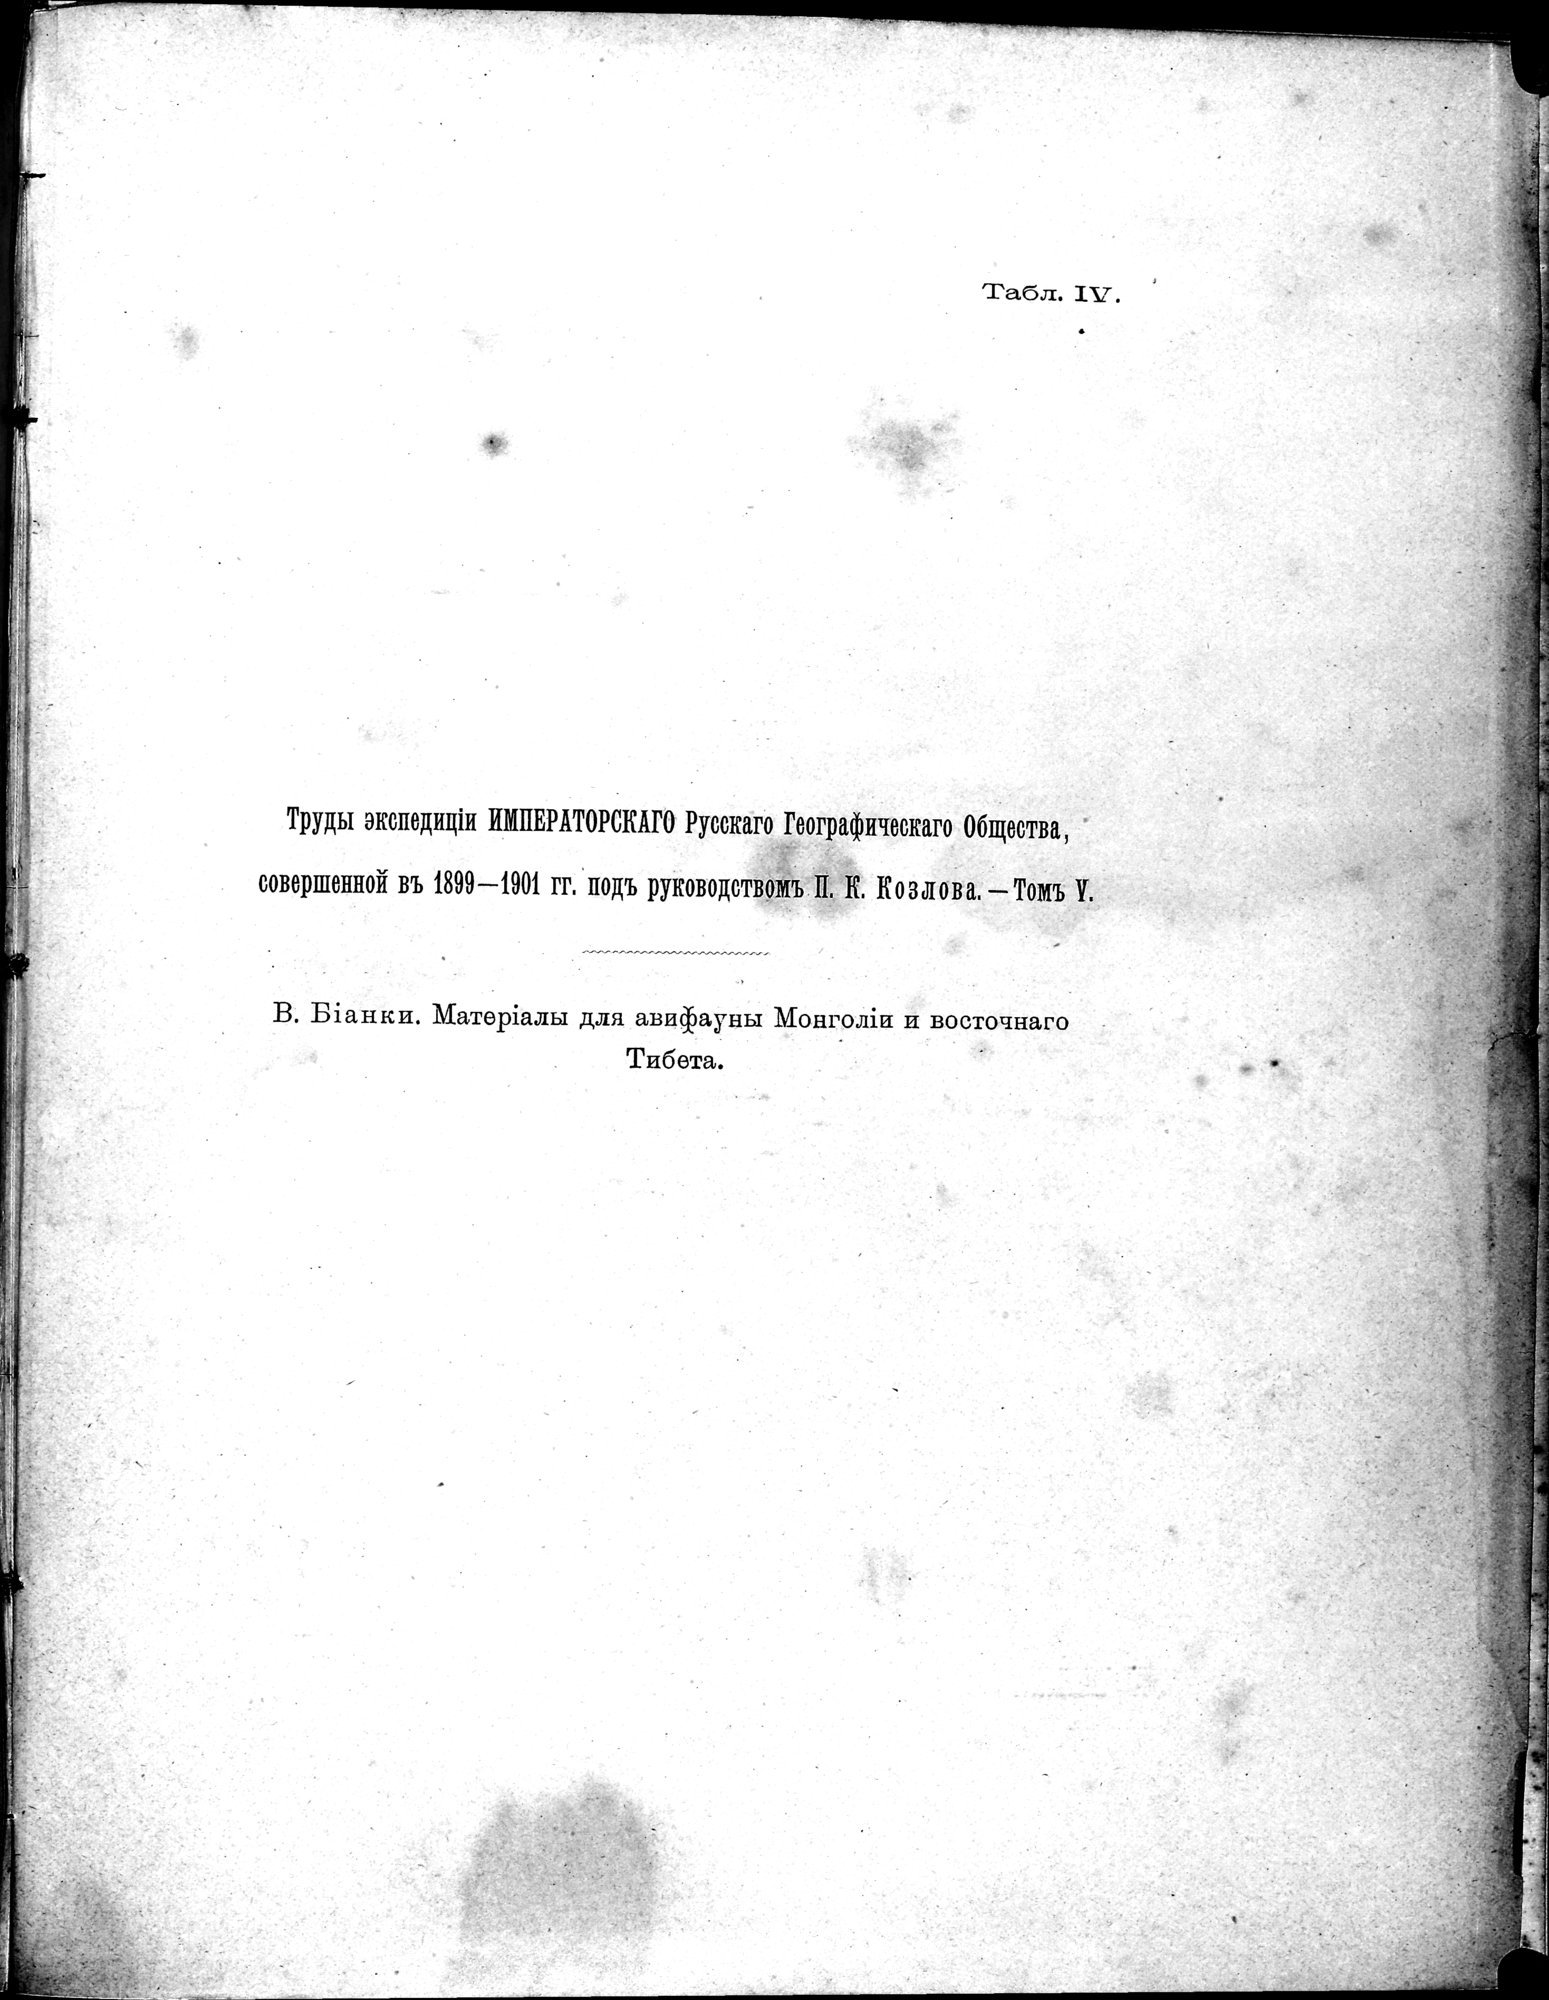 Mongoliia i Kam : vol.5 / Page 337 (Grayscale High Resolution Image)